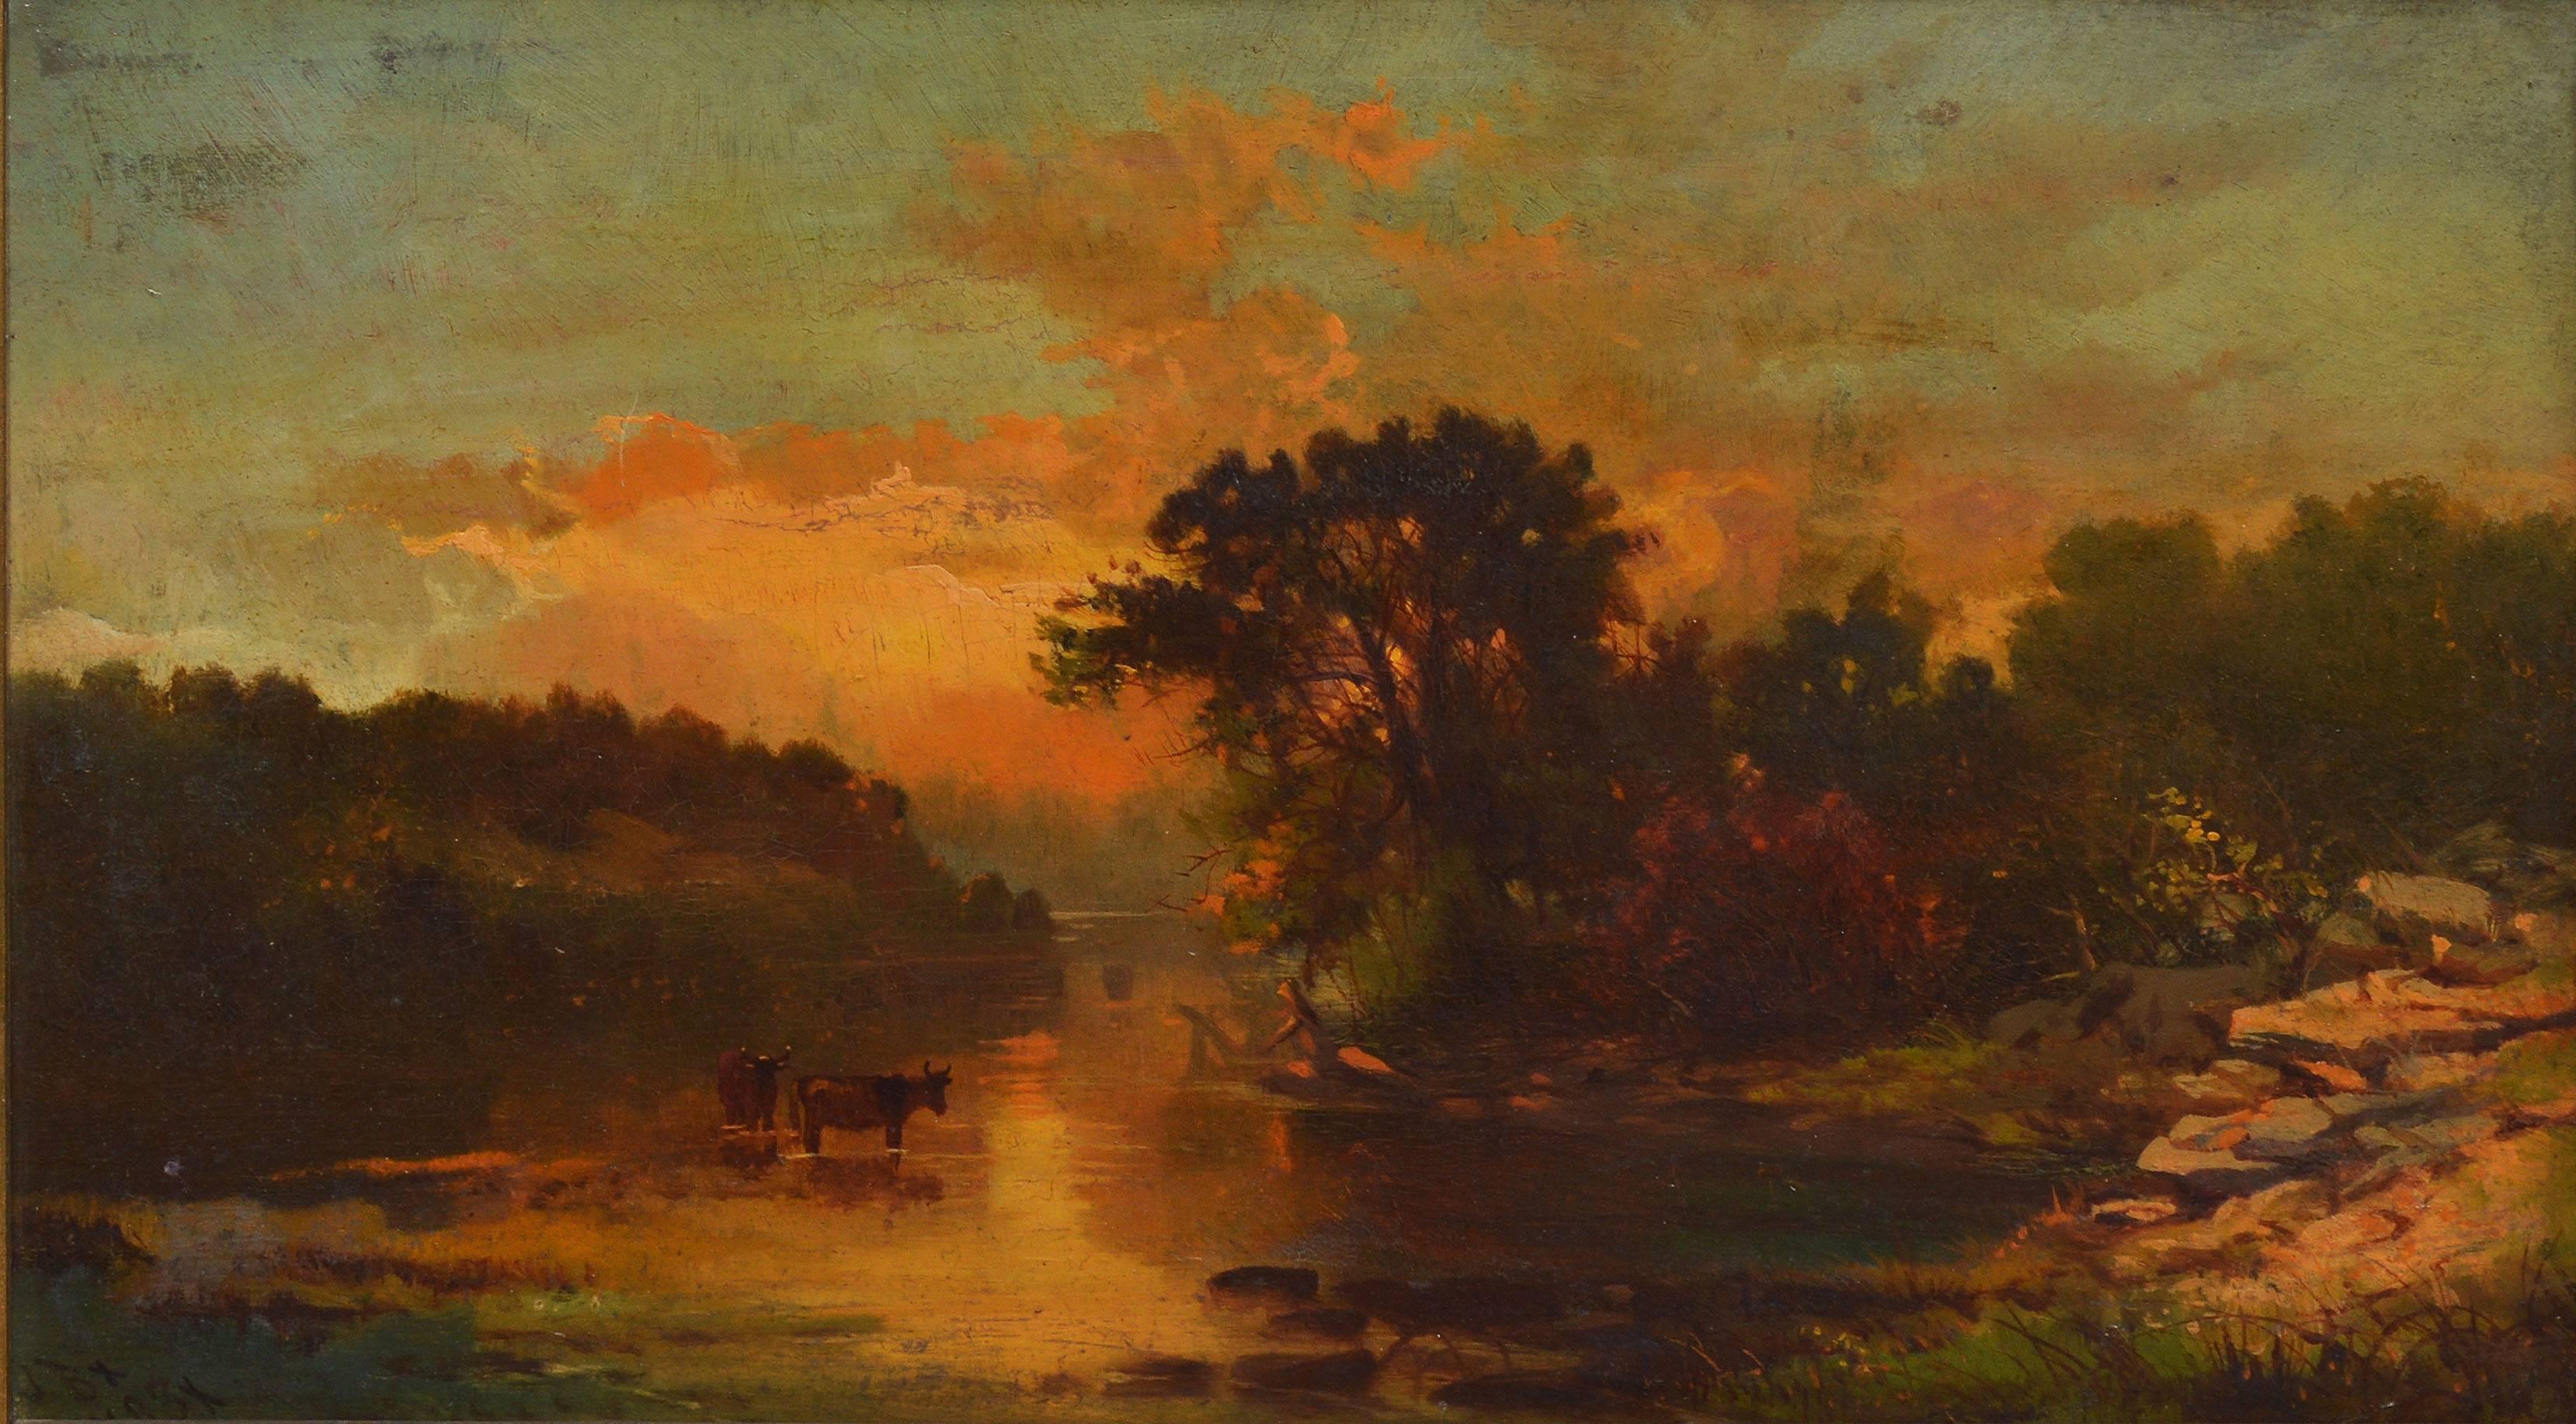 Hudson River School Landscape - Brown Landscape Painting by Unknown